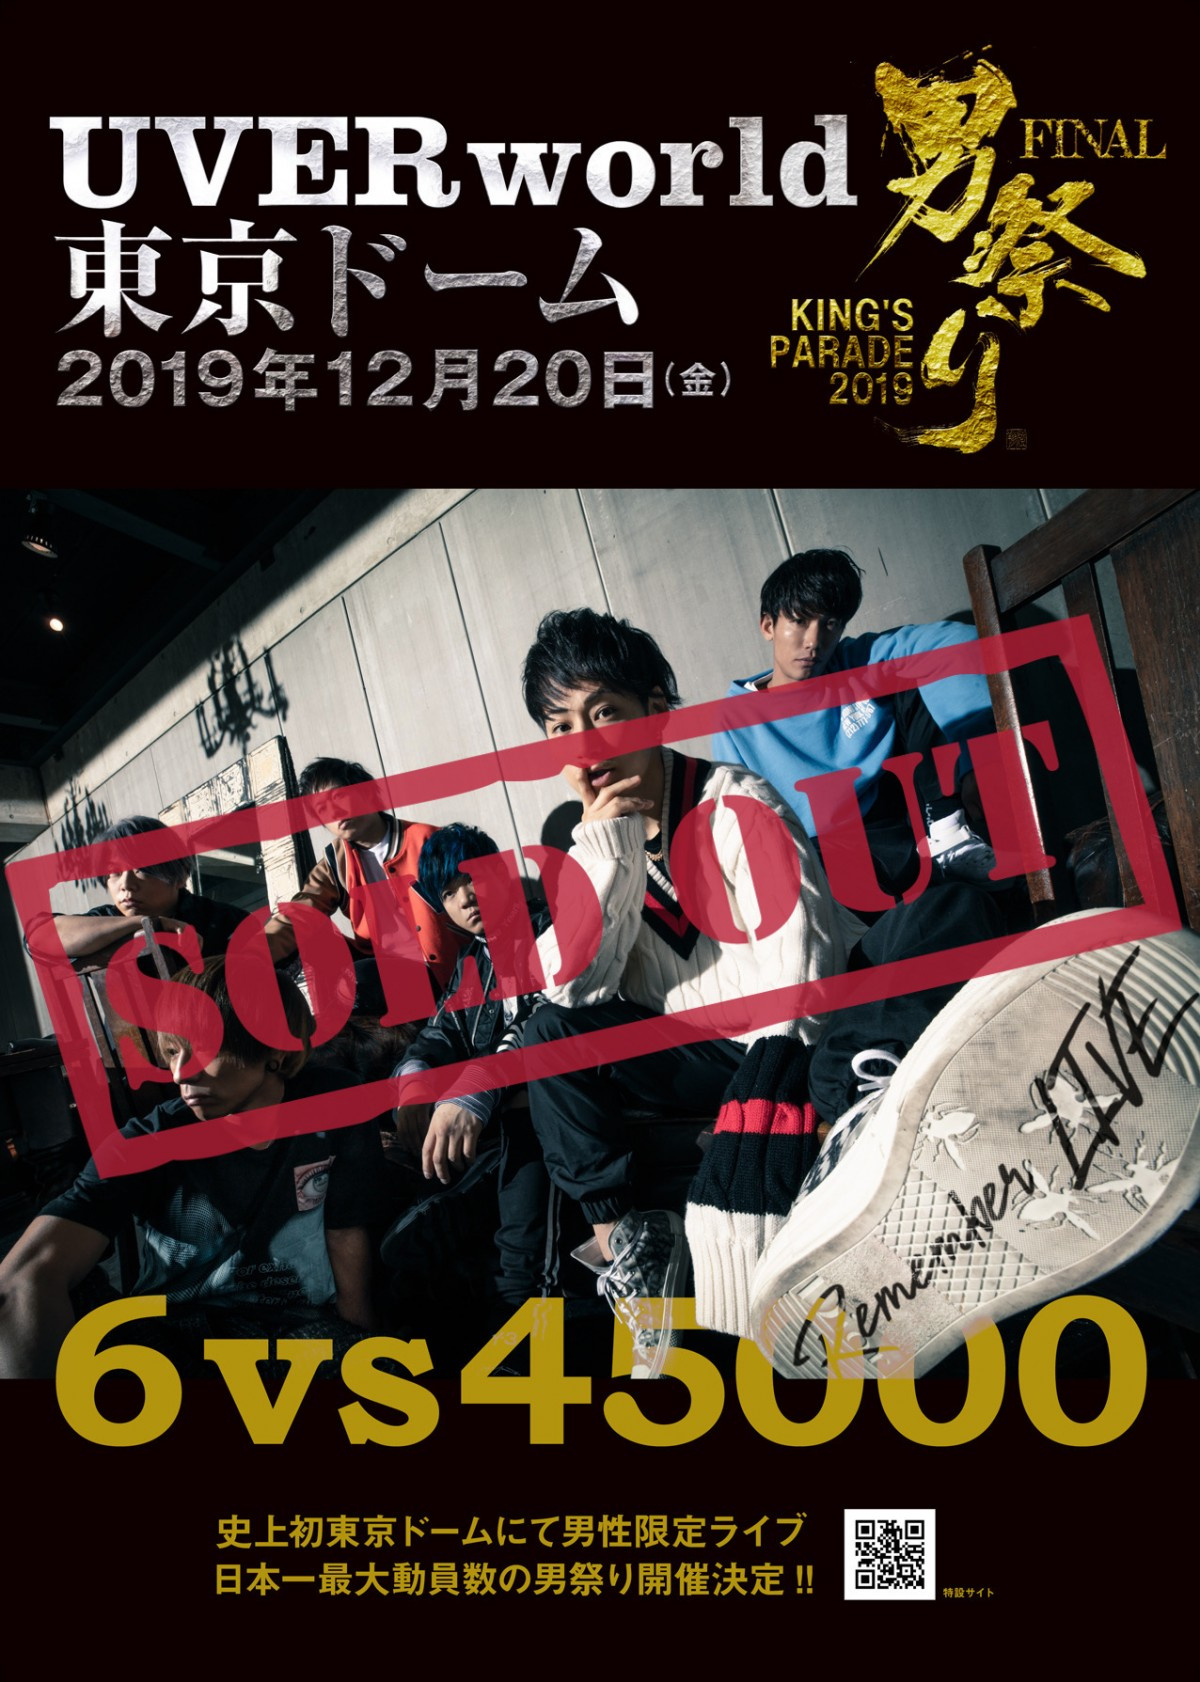 Uverworld 史上最大 東京ドーム男祭り完売 日本記録大幅更新の4 5万人動員へ Oricon News